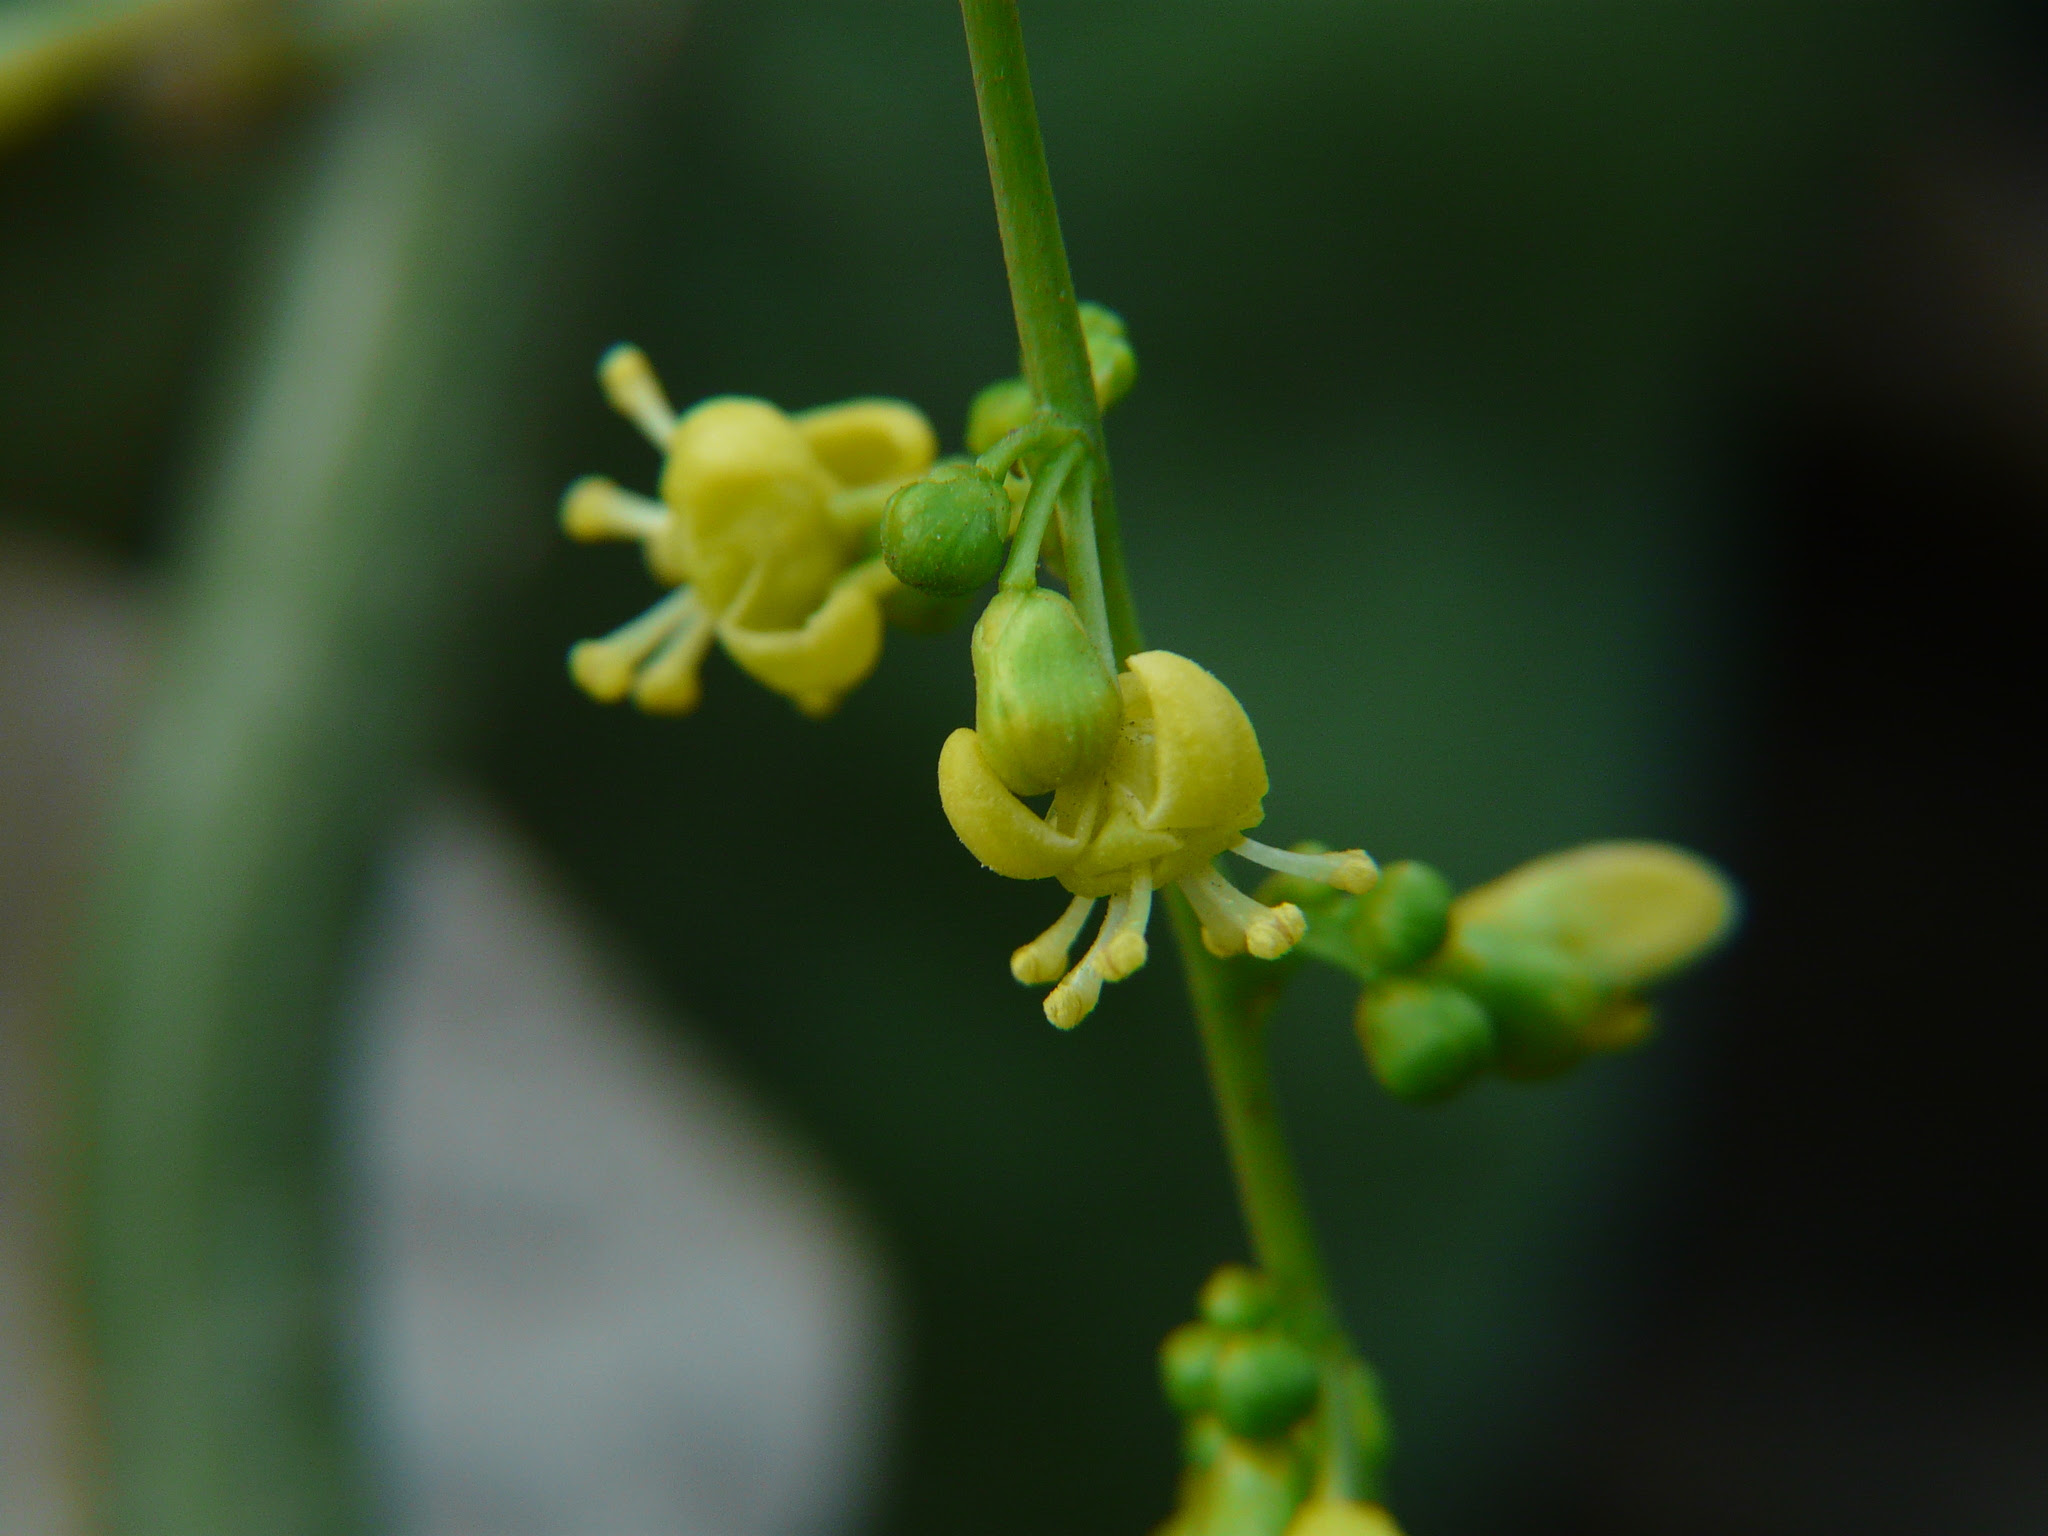 Tinospora cordifolia (Willd.) Hook.f. & Thomson